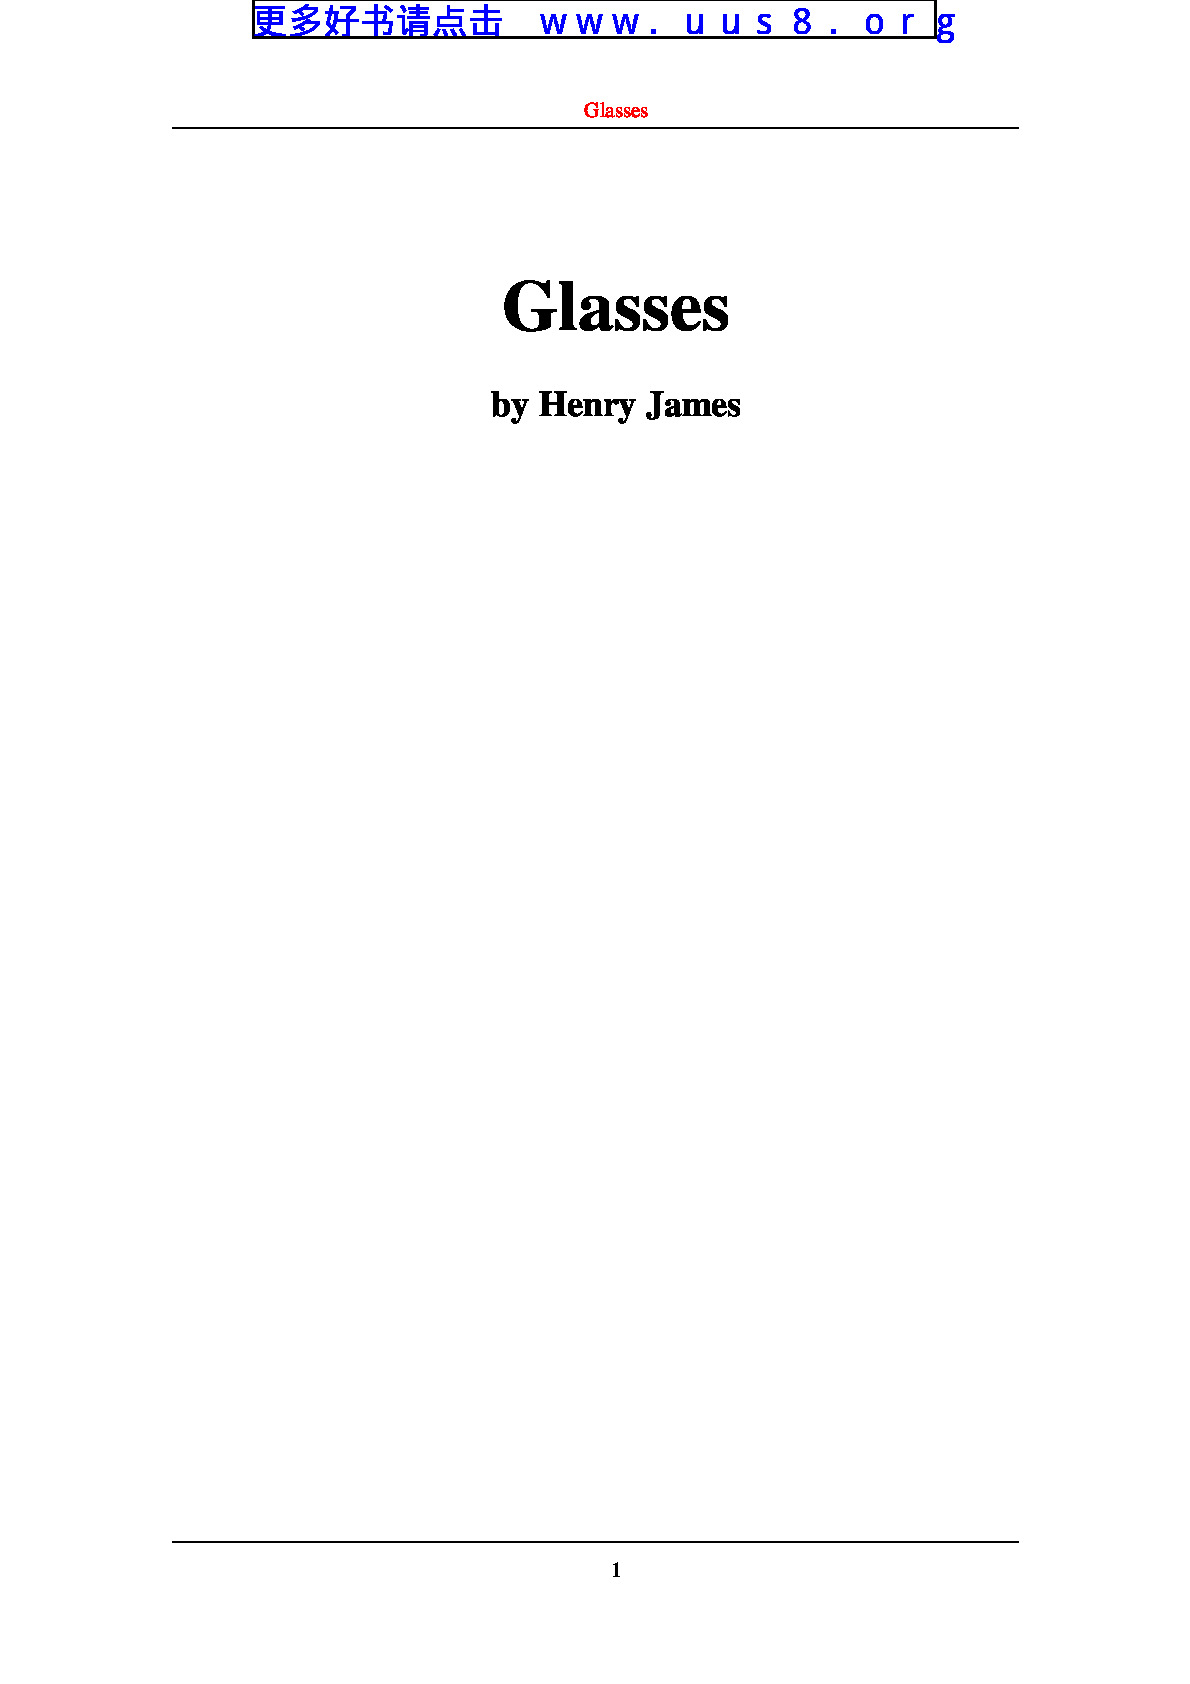 Glasses(玻璃)